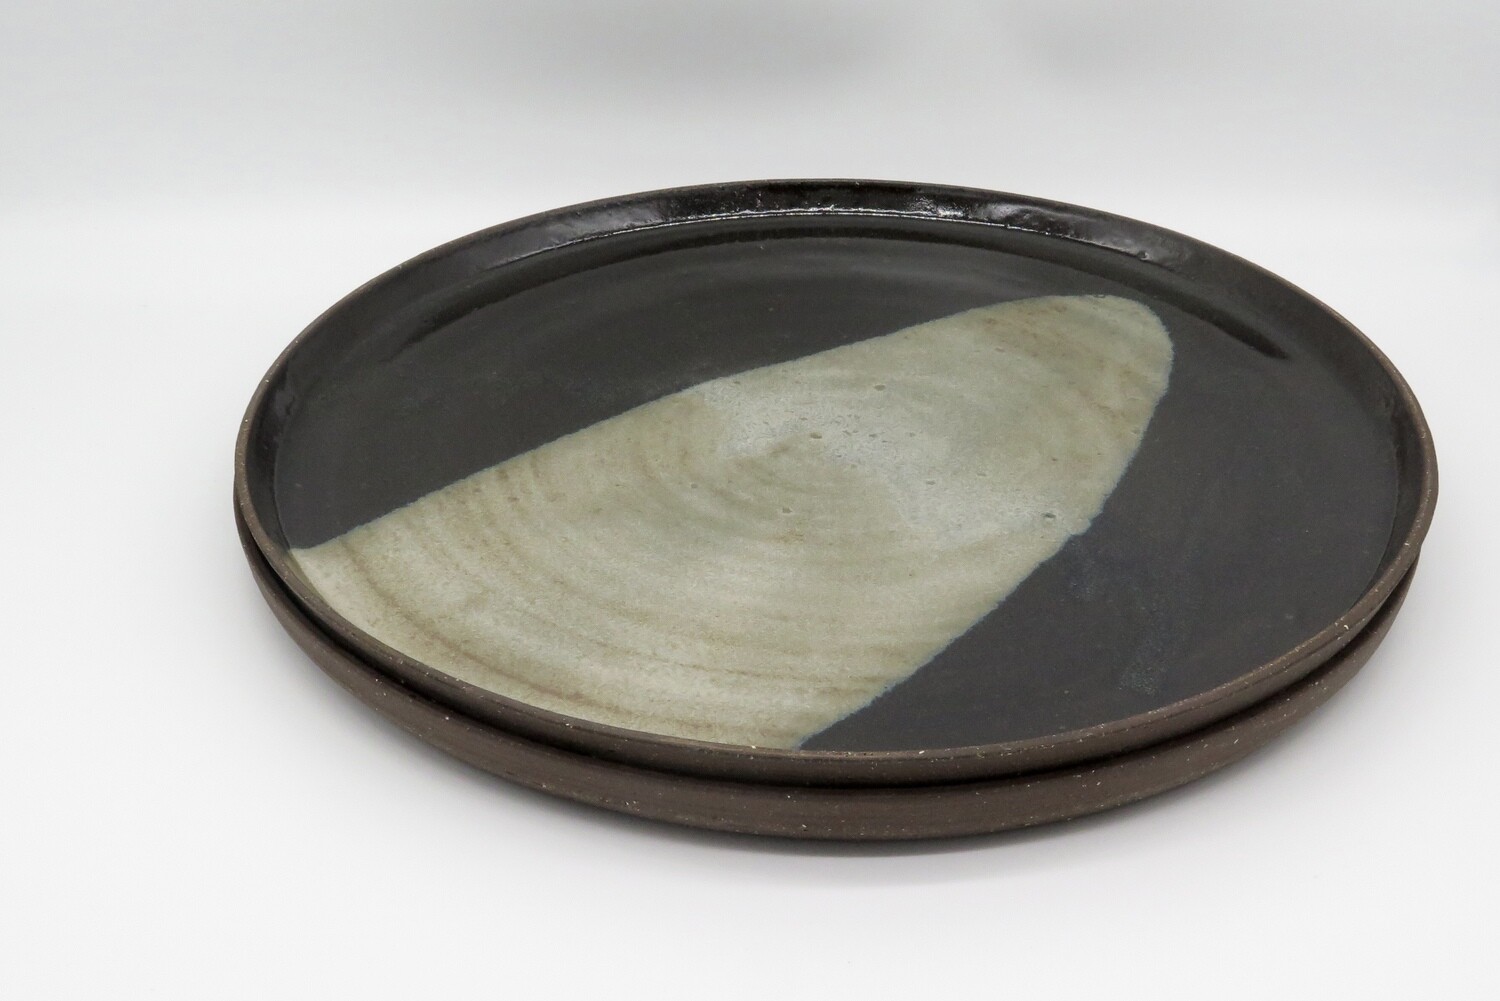 Platter - Black and mottled golden grey serving platter.